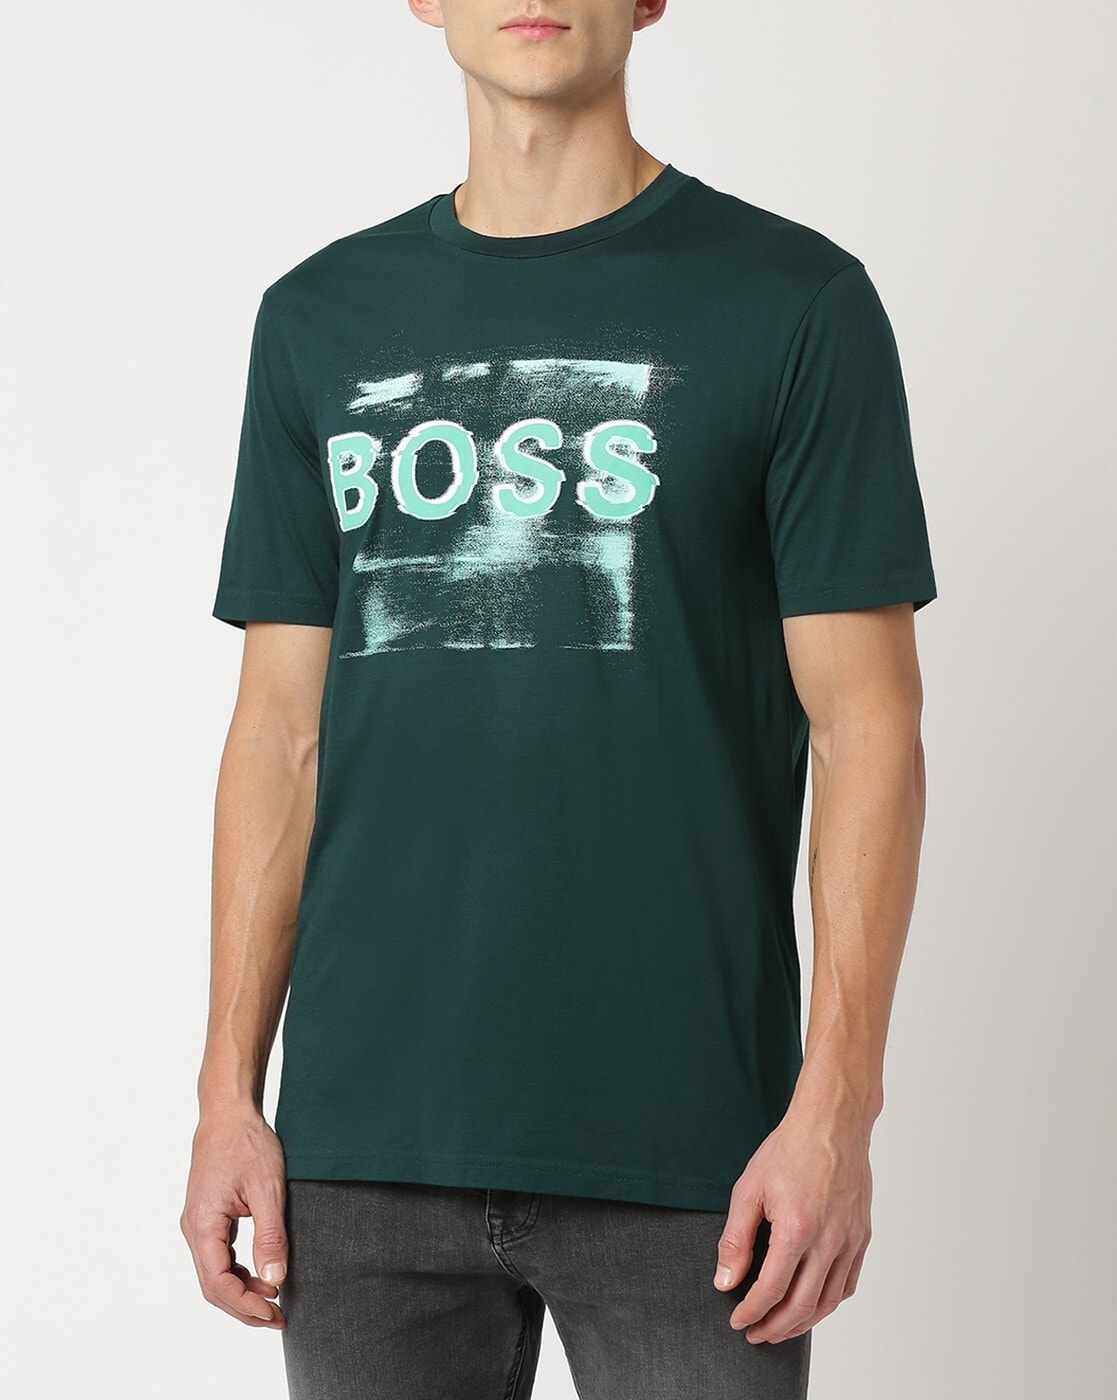 Buy Tshirts for Men by BOSS Online Ajio.com